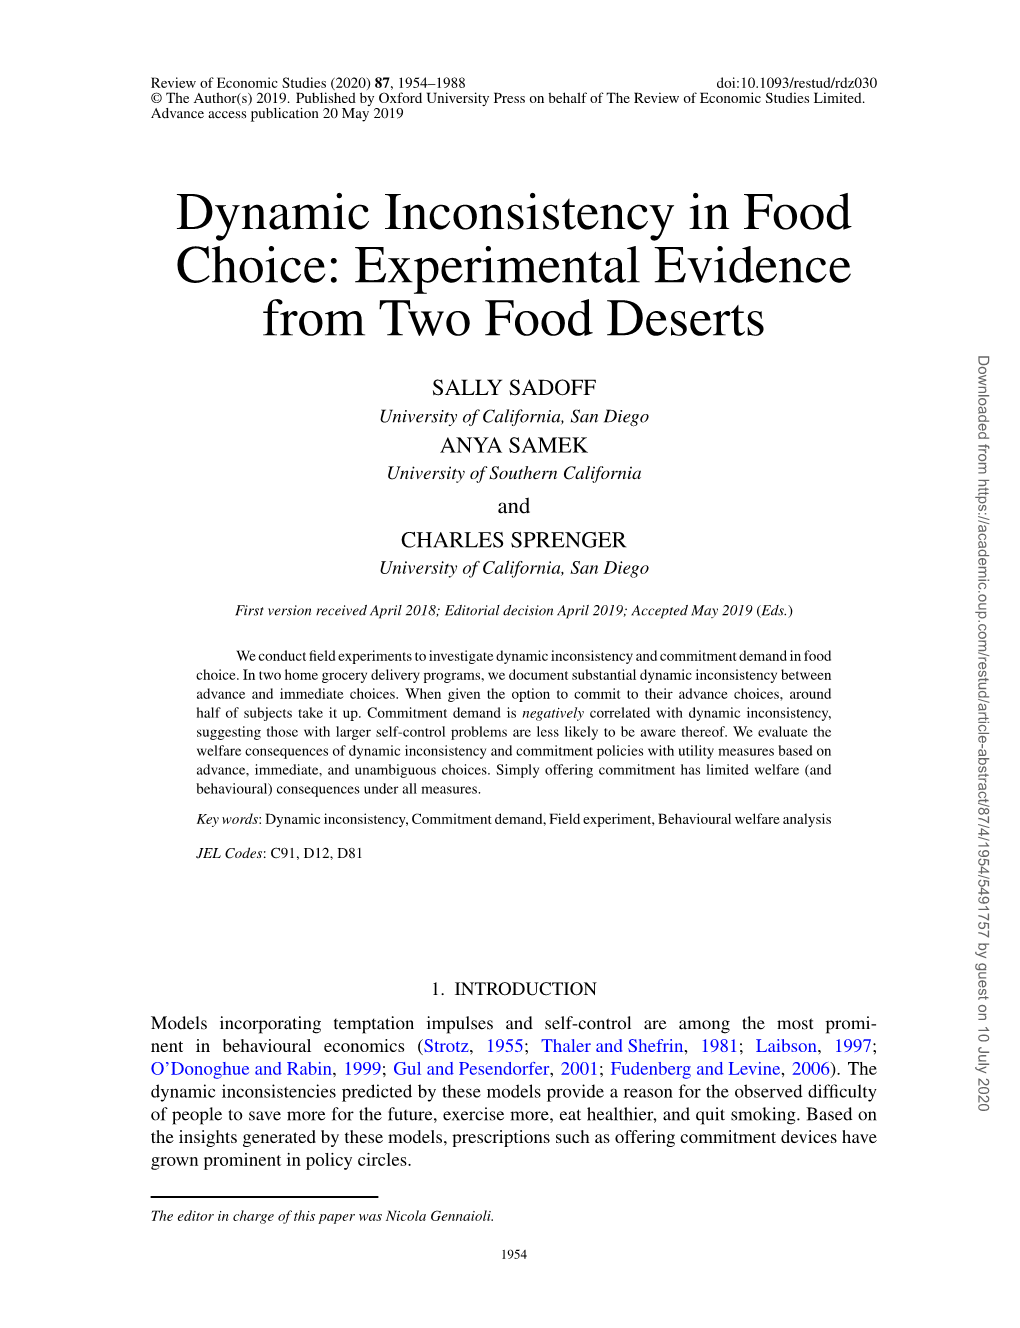 Dynamic Inconsistency in Food Choice